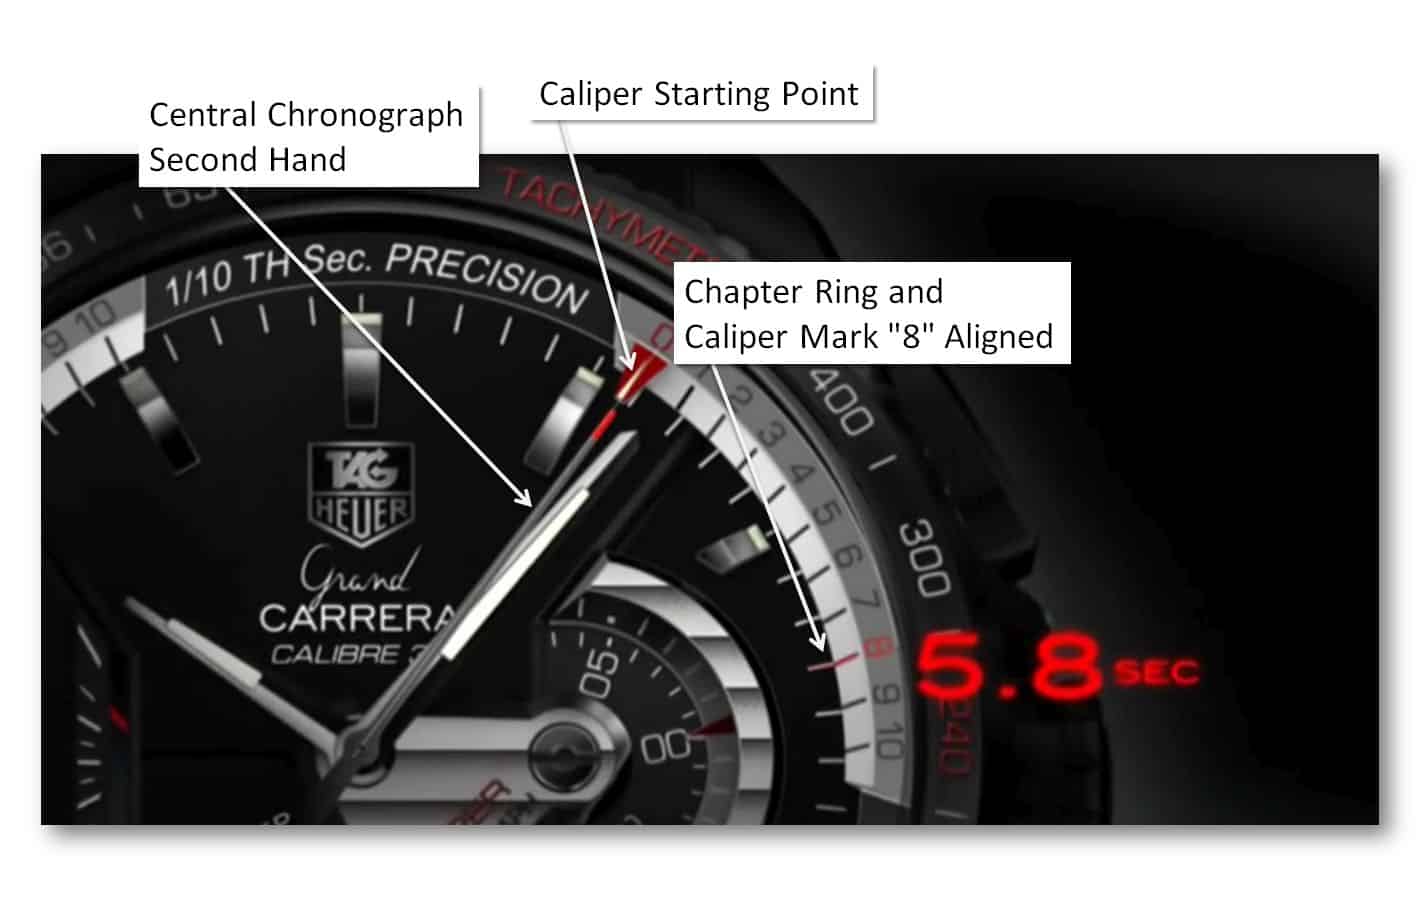 TAG Heuer Grand Carrera Calibre 36 RS2 Caliper Chronograph Ti2 principle explained